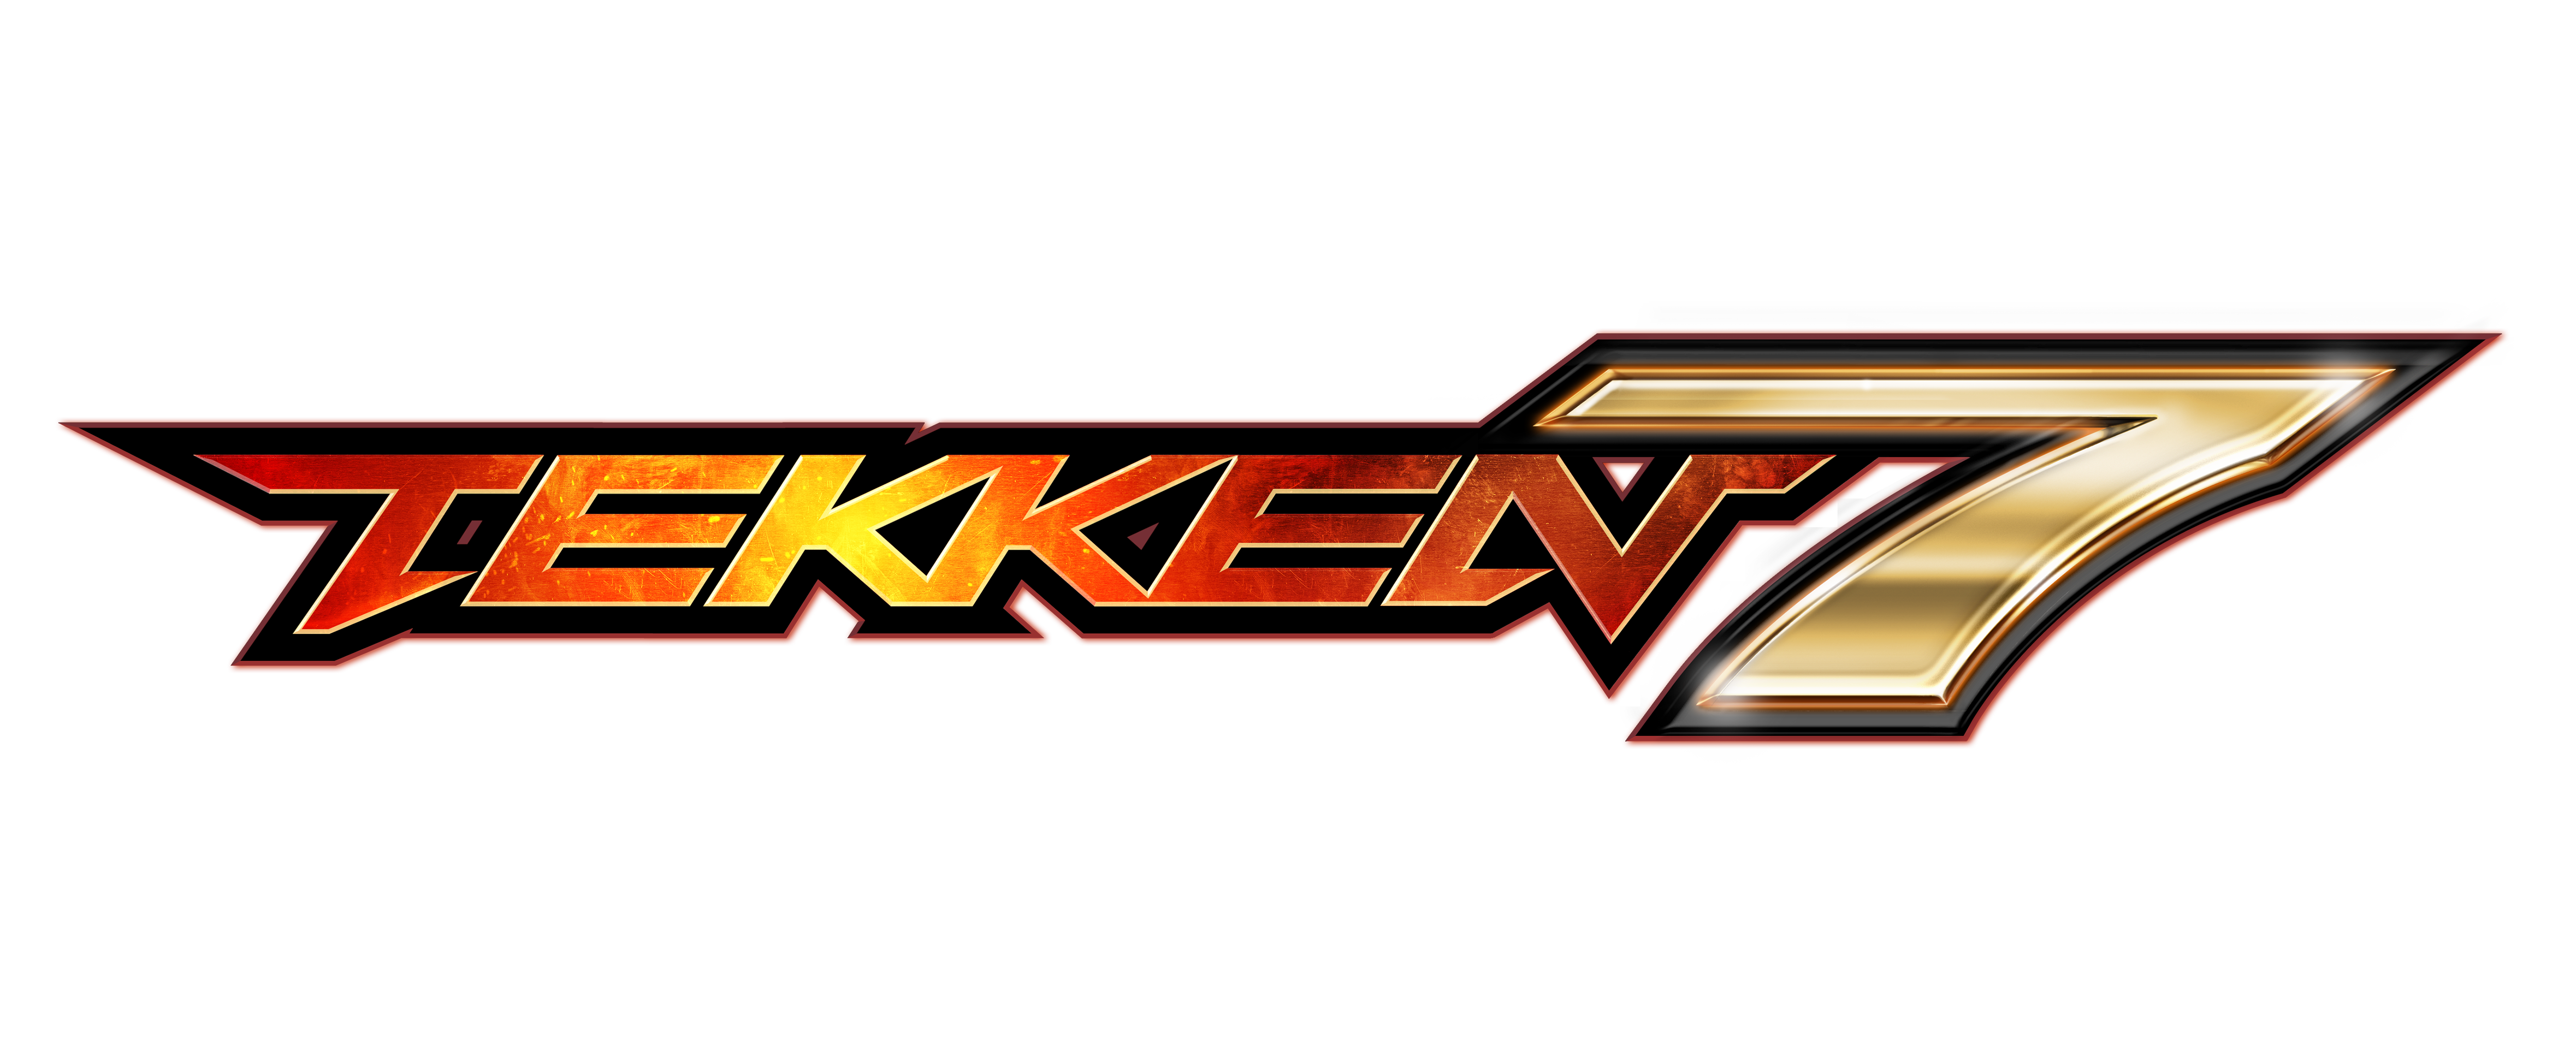 Tekken 7 logo PNG Image